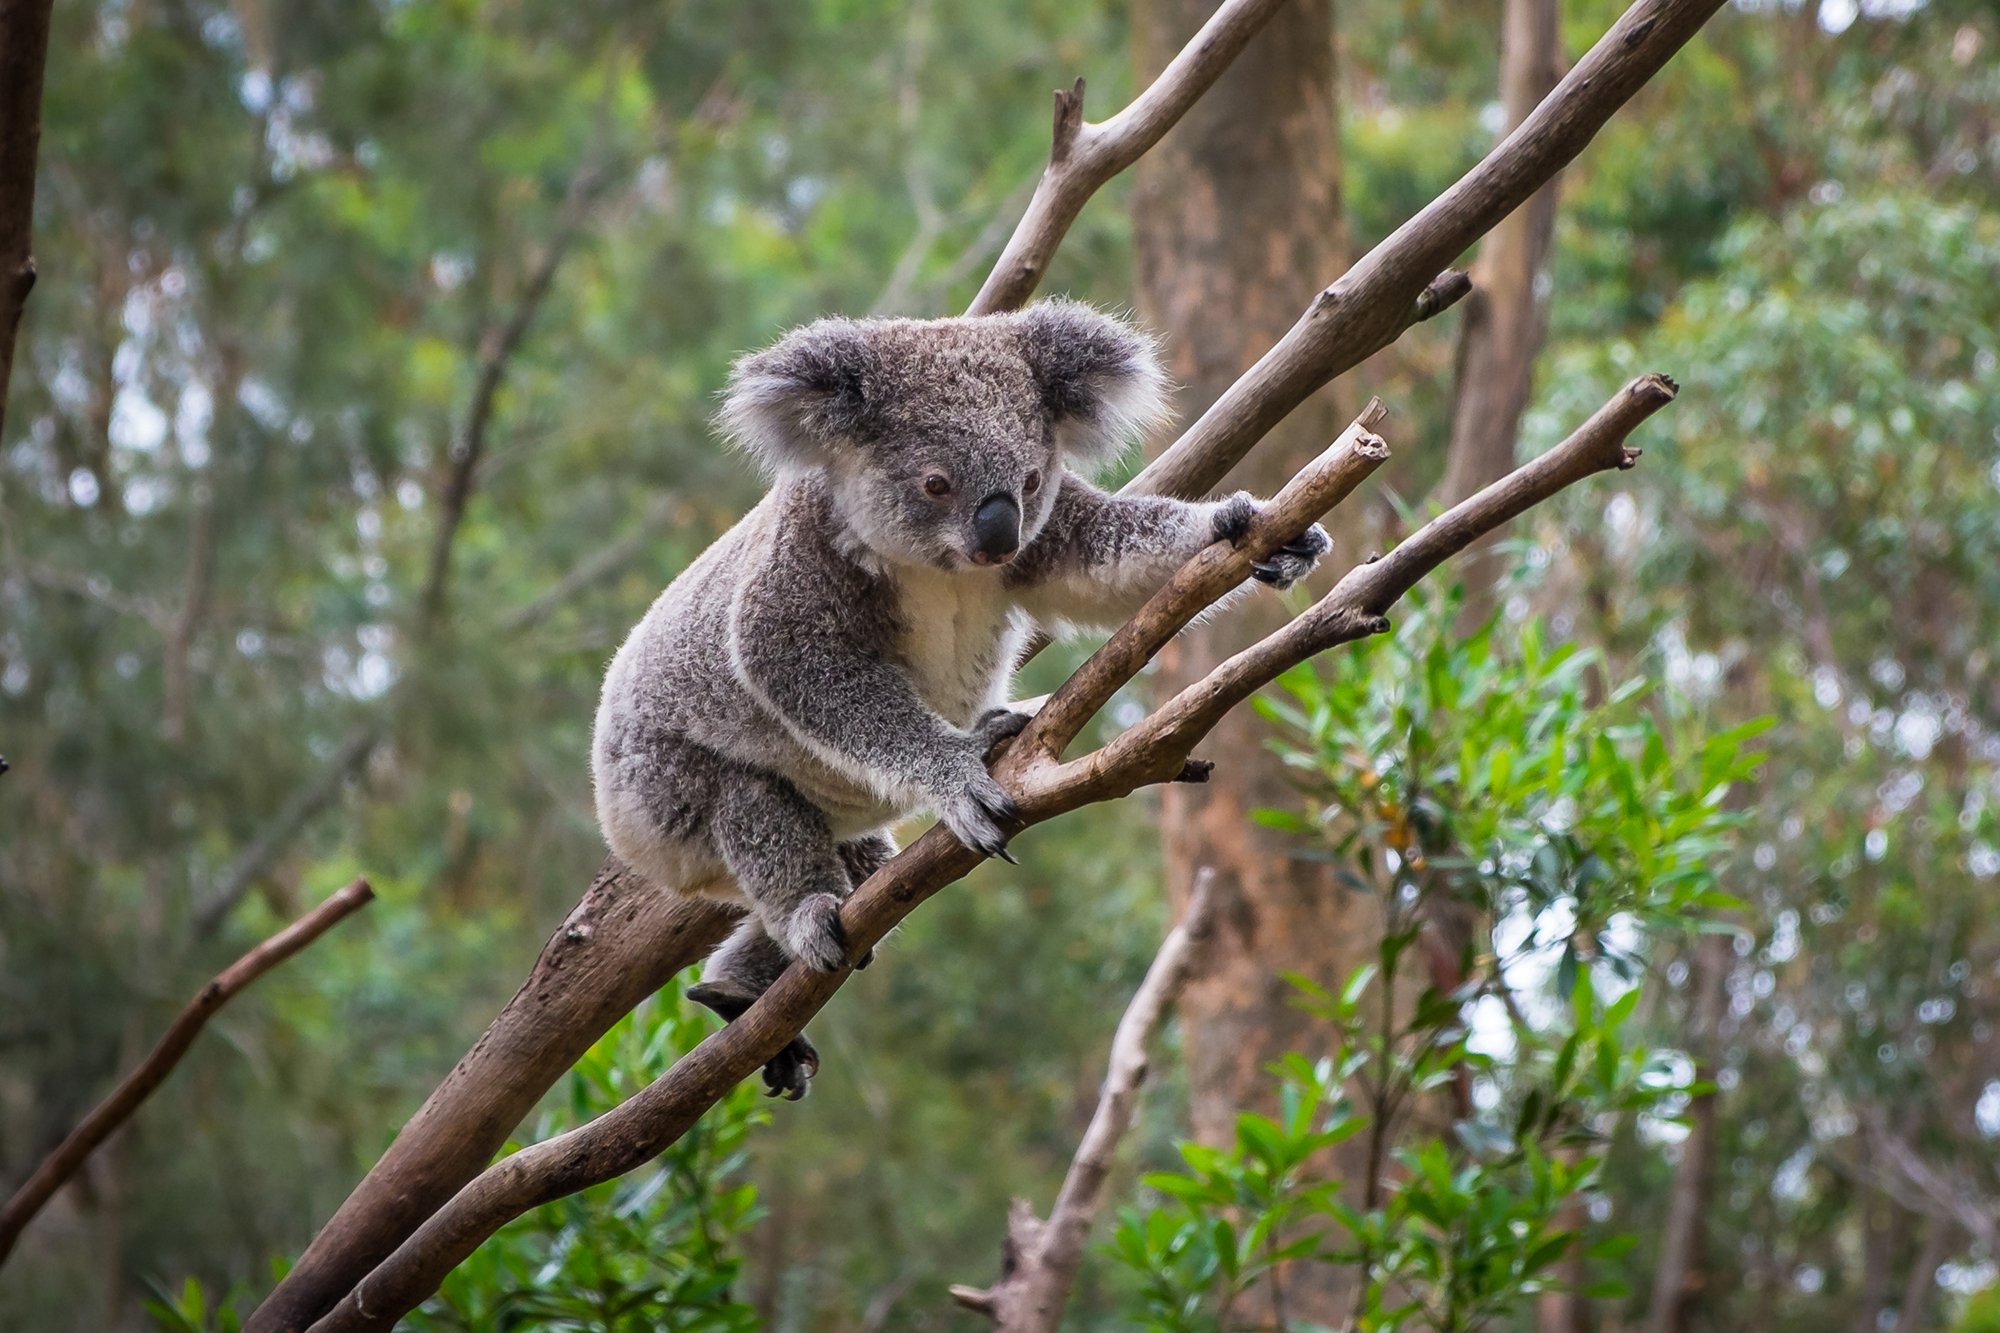 https://www.australiangeographic.com.au/wp-content/uploads/2021/07/drop-bear-myth-killer-koala.jpg